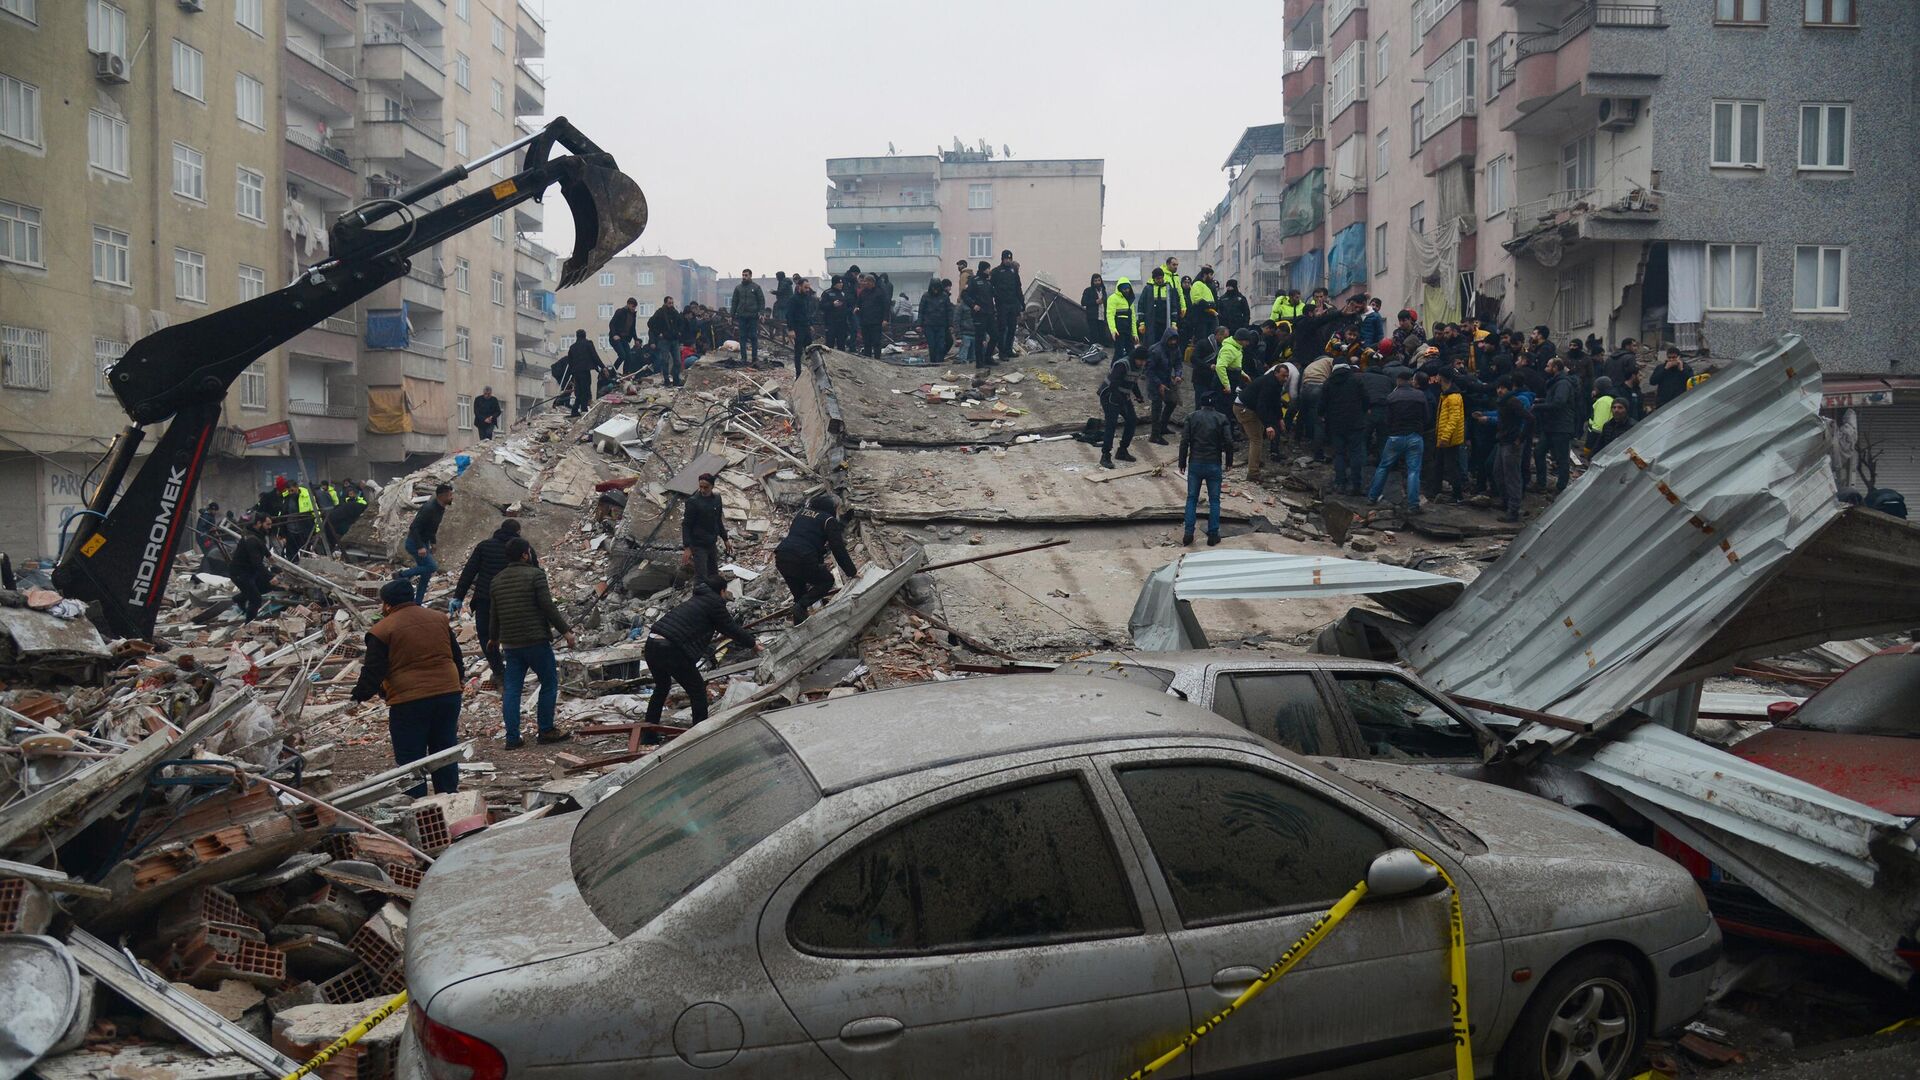 Последствия землетрясения в Турции и Сирии 6 февраля - Sputnik Беларусь, 1920, 07.02.2023